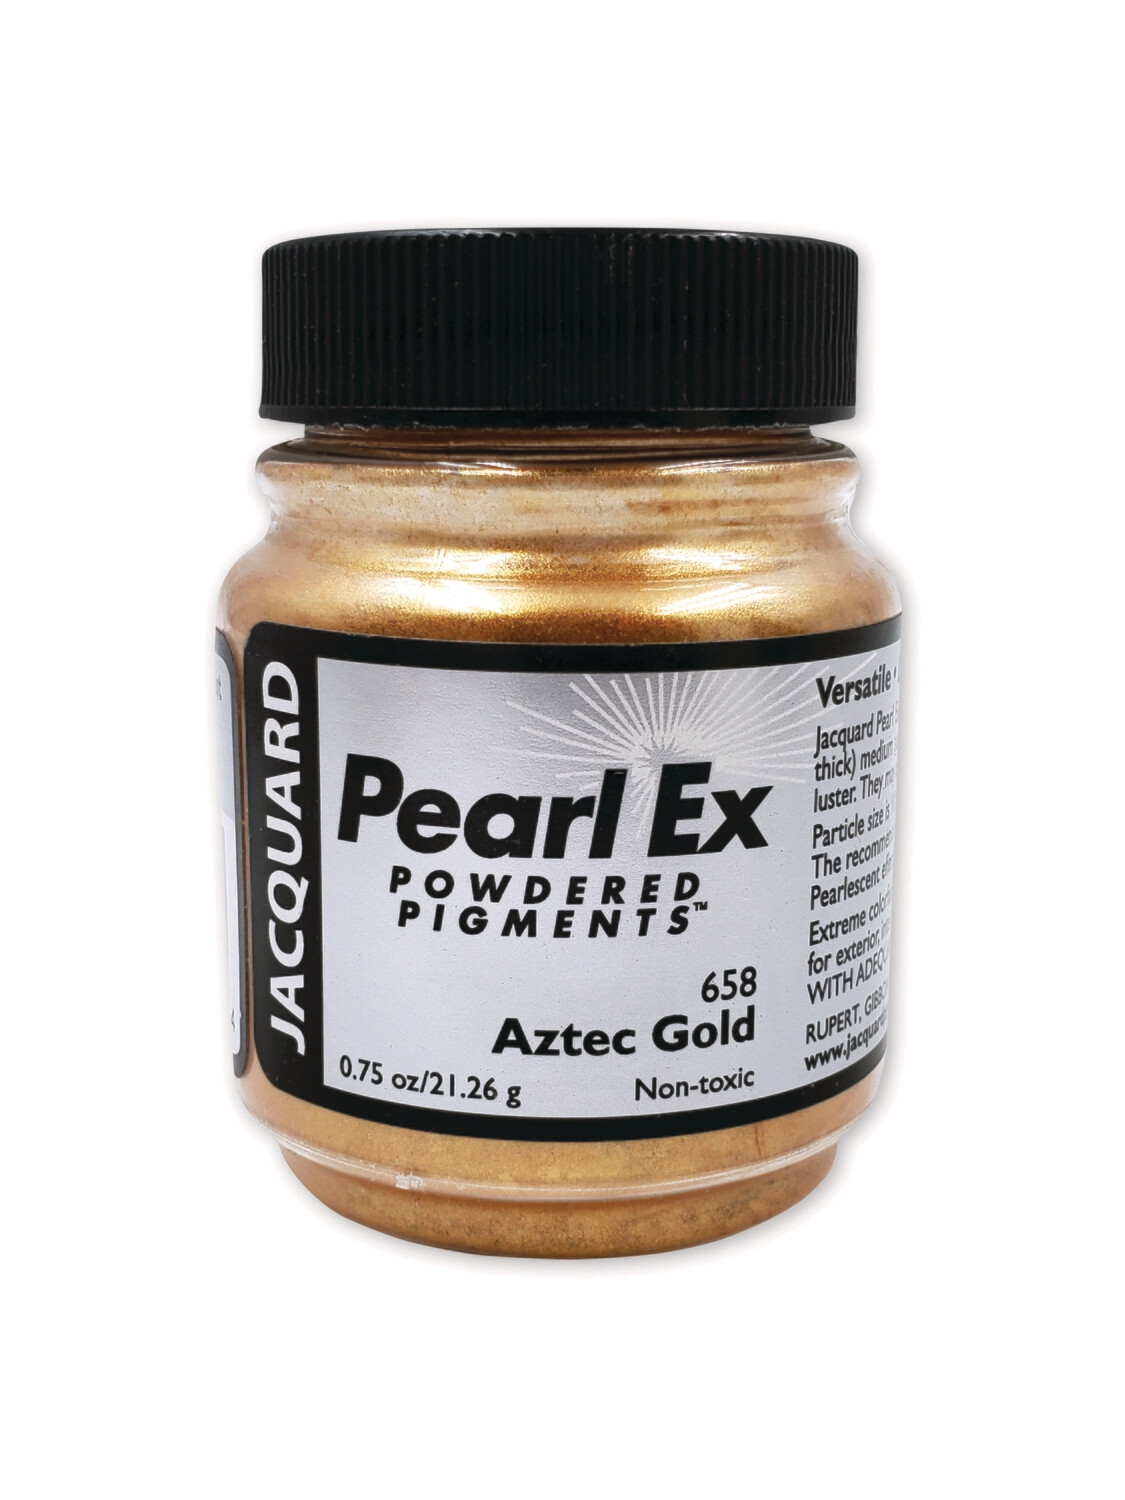 Pearl Ex Powdered Pigments-Aztec Gold